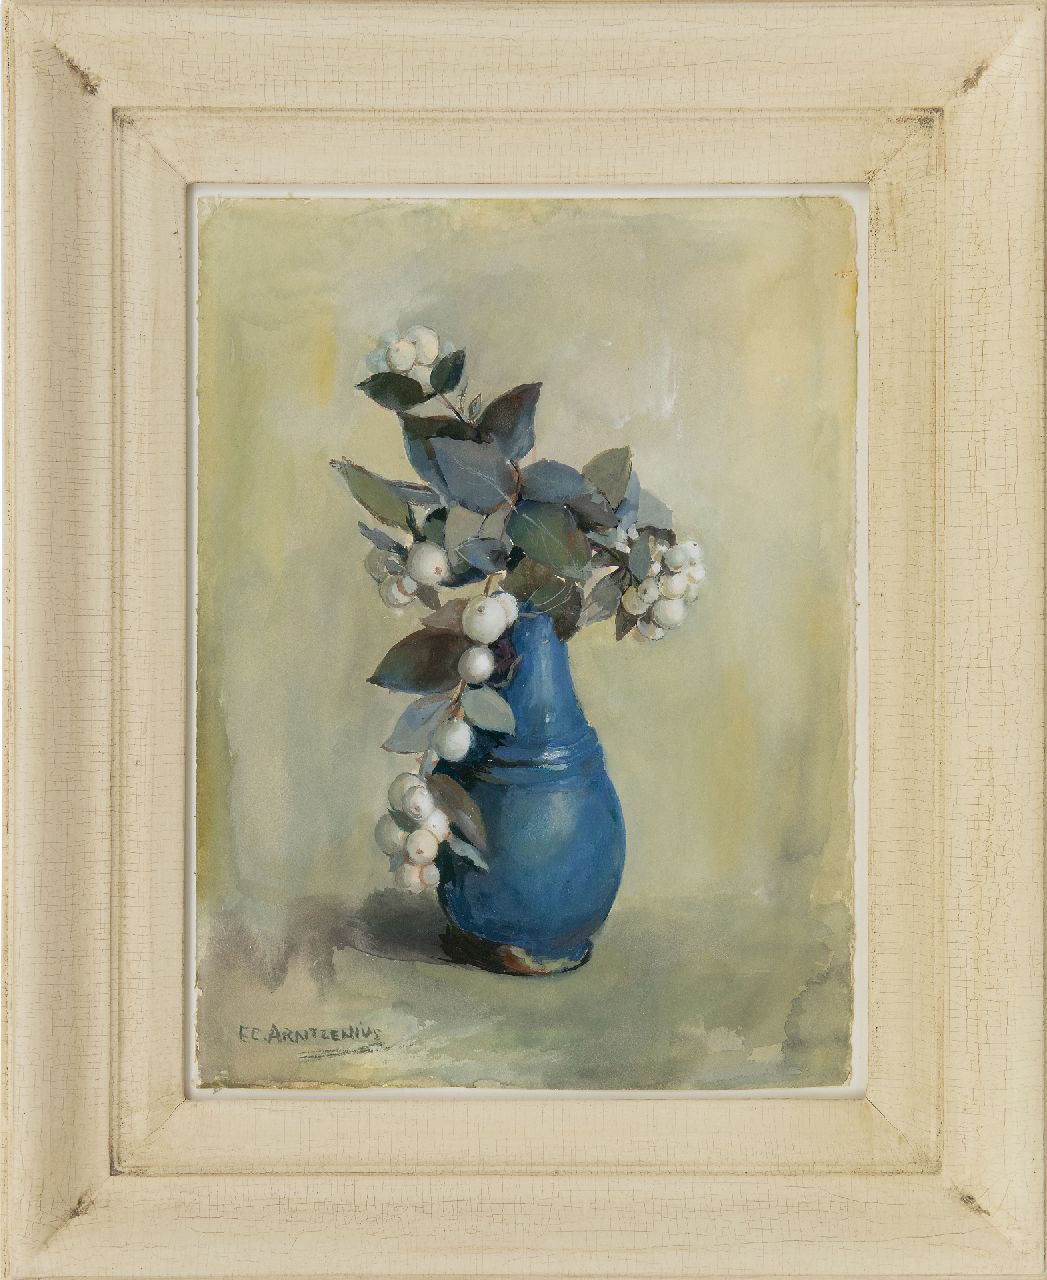 Arntzenius E.C.  | Elise Claudine Arntzenius | Watercolours and drawings offered for sale | Snow berries in a blue vase, gouache on paper 36.8 x 27.3 cm, signed l.l.